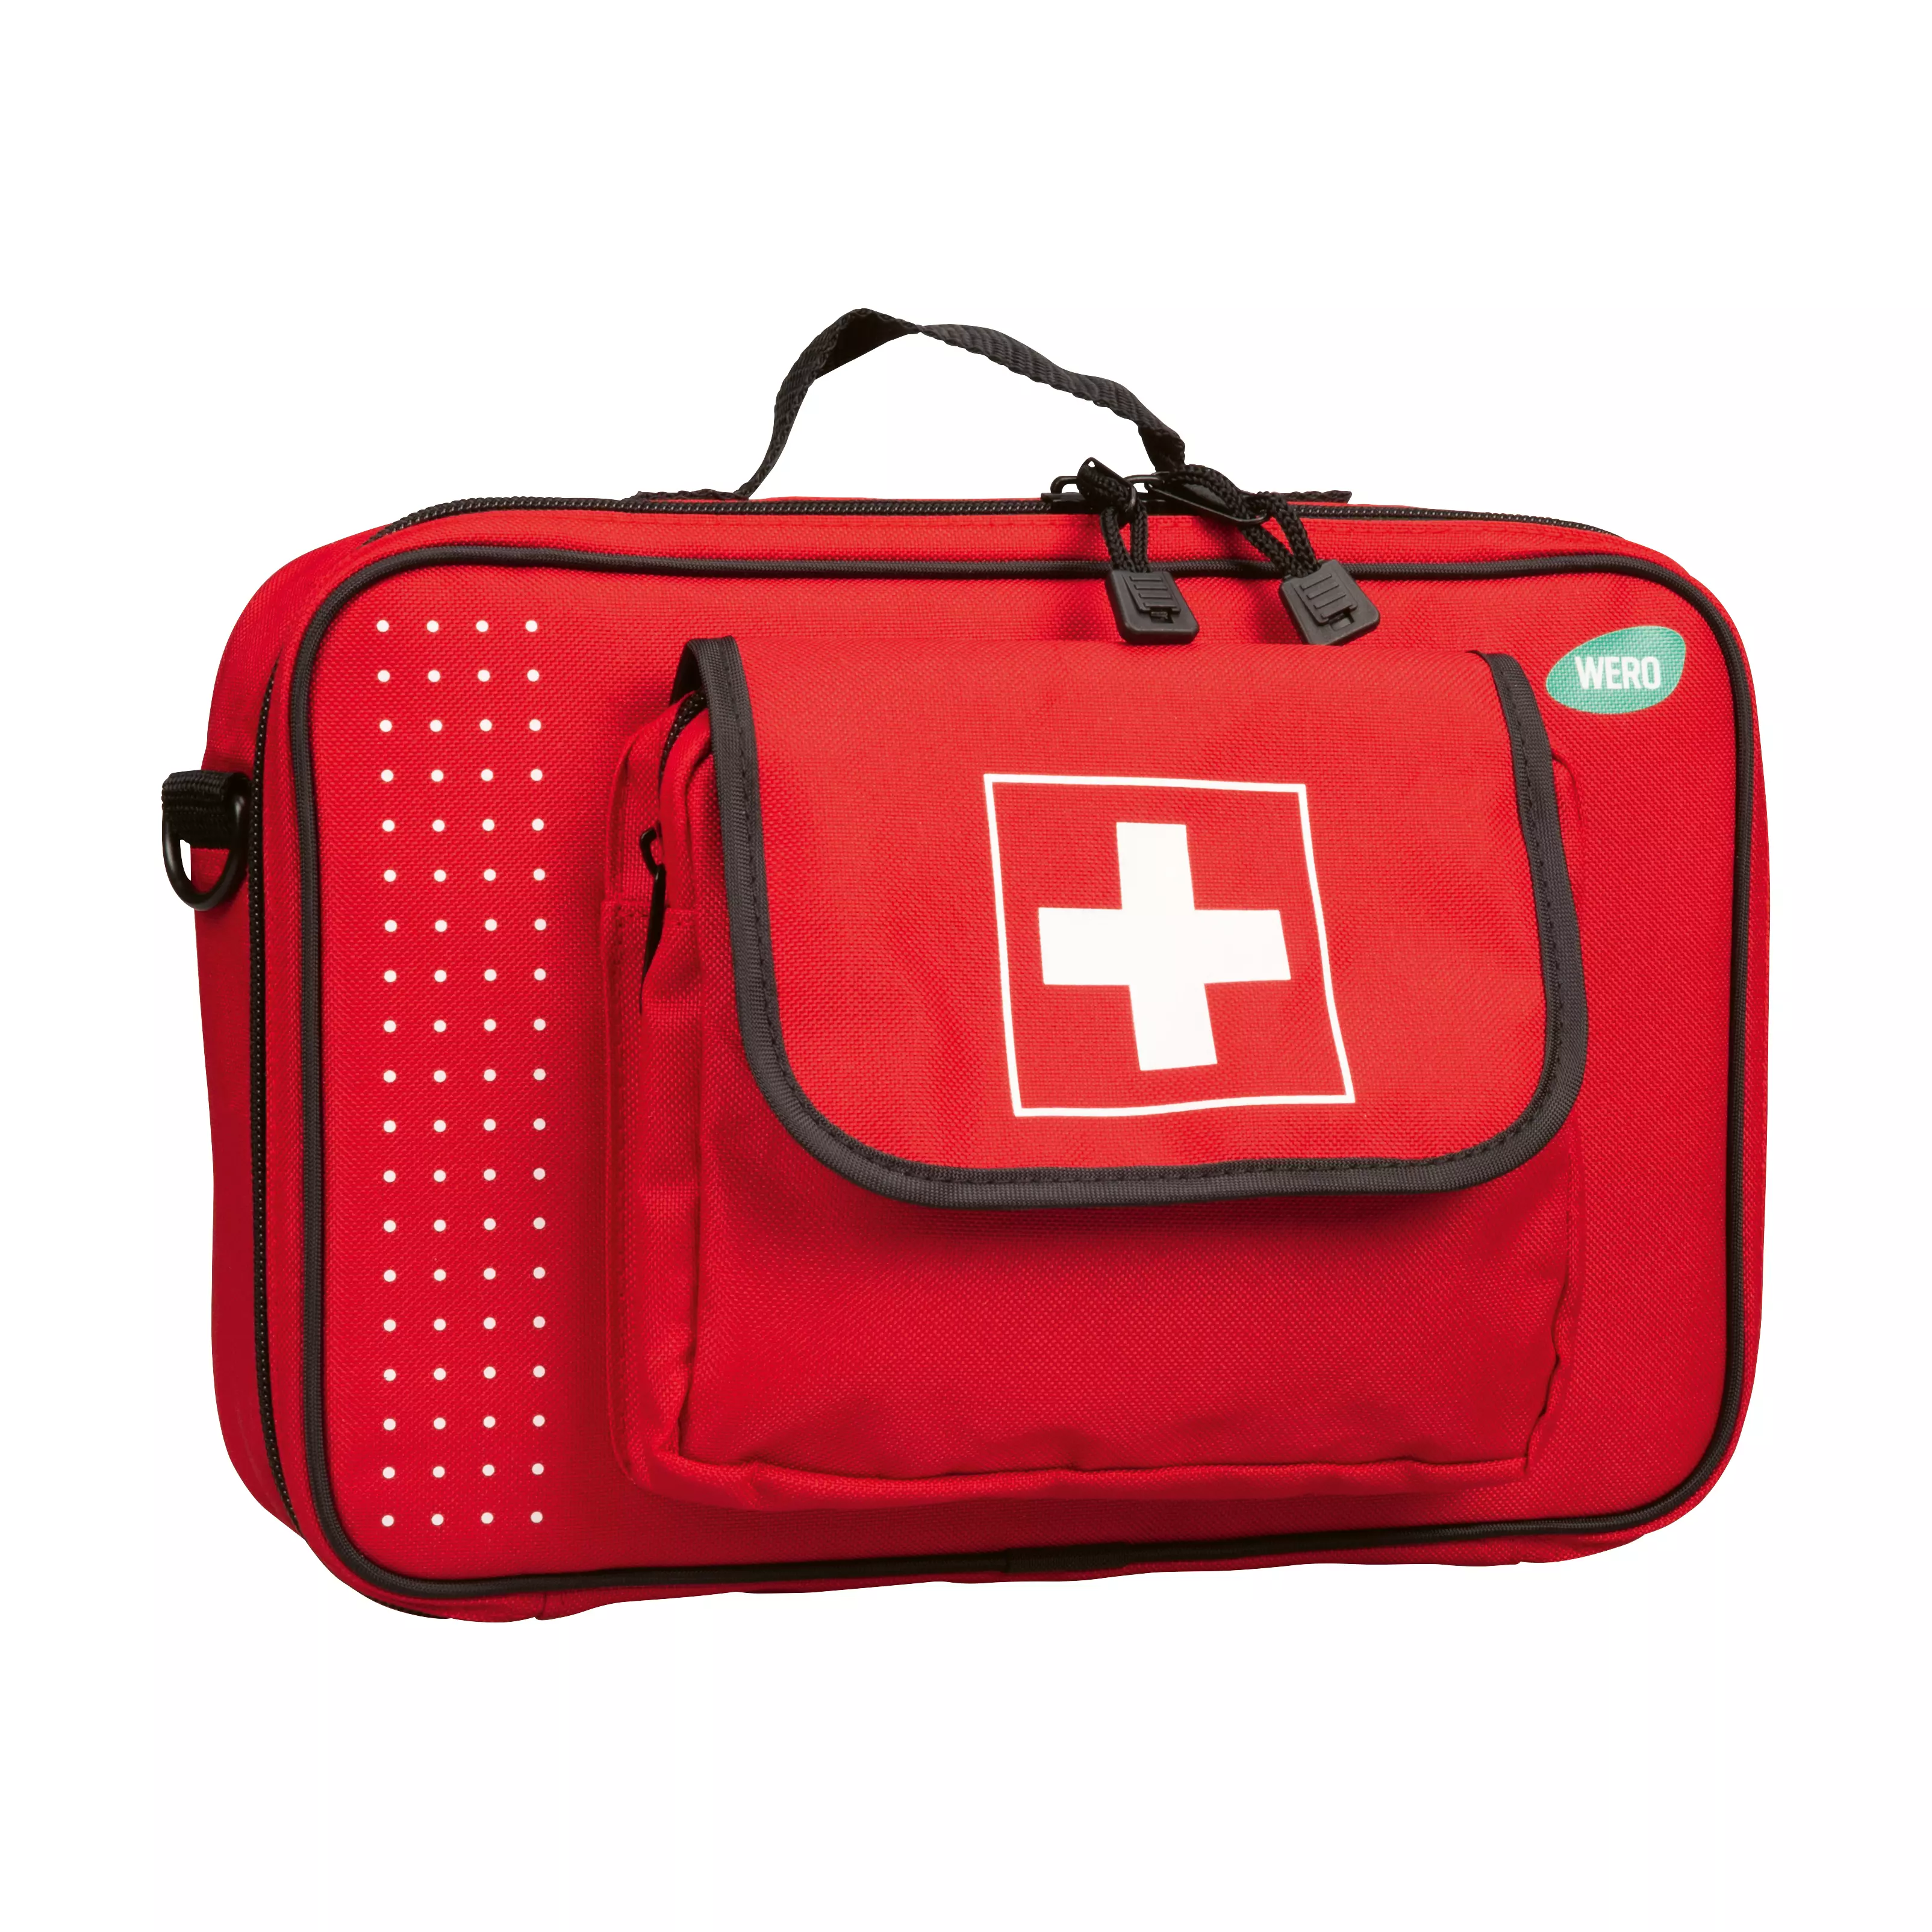 WERO first aid bag - large